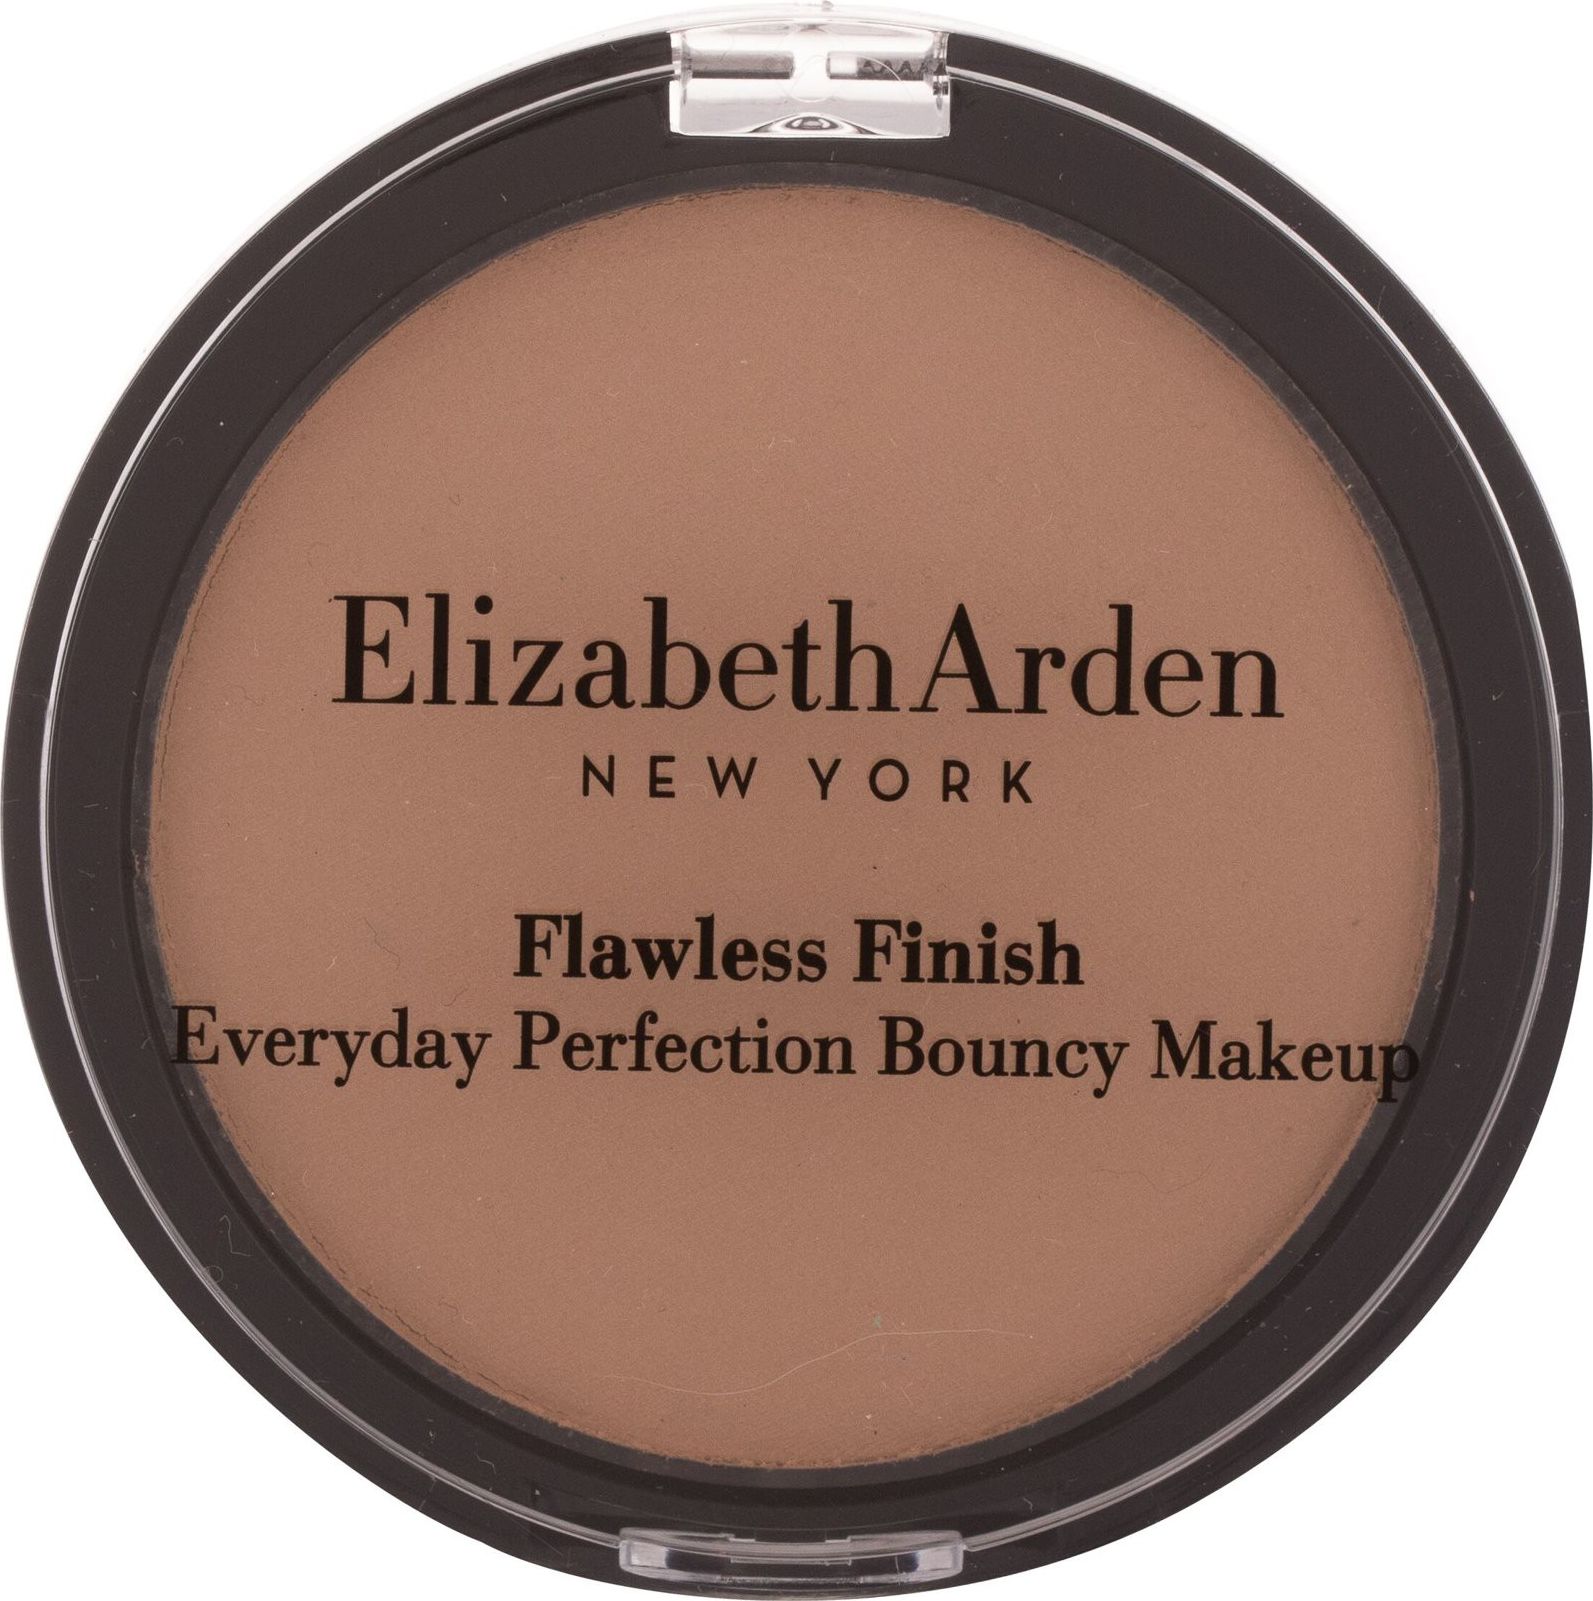 Elizabeth Arden Elizabeth Arden Flawless Finish Everyday Perfection Podklad 9g 06 Neutral Beige tester 120103 (085805562373) tonālais krēms